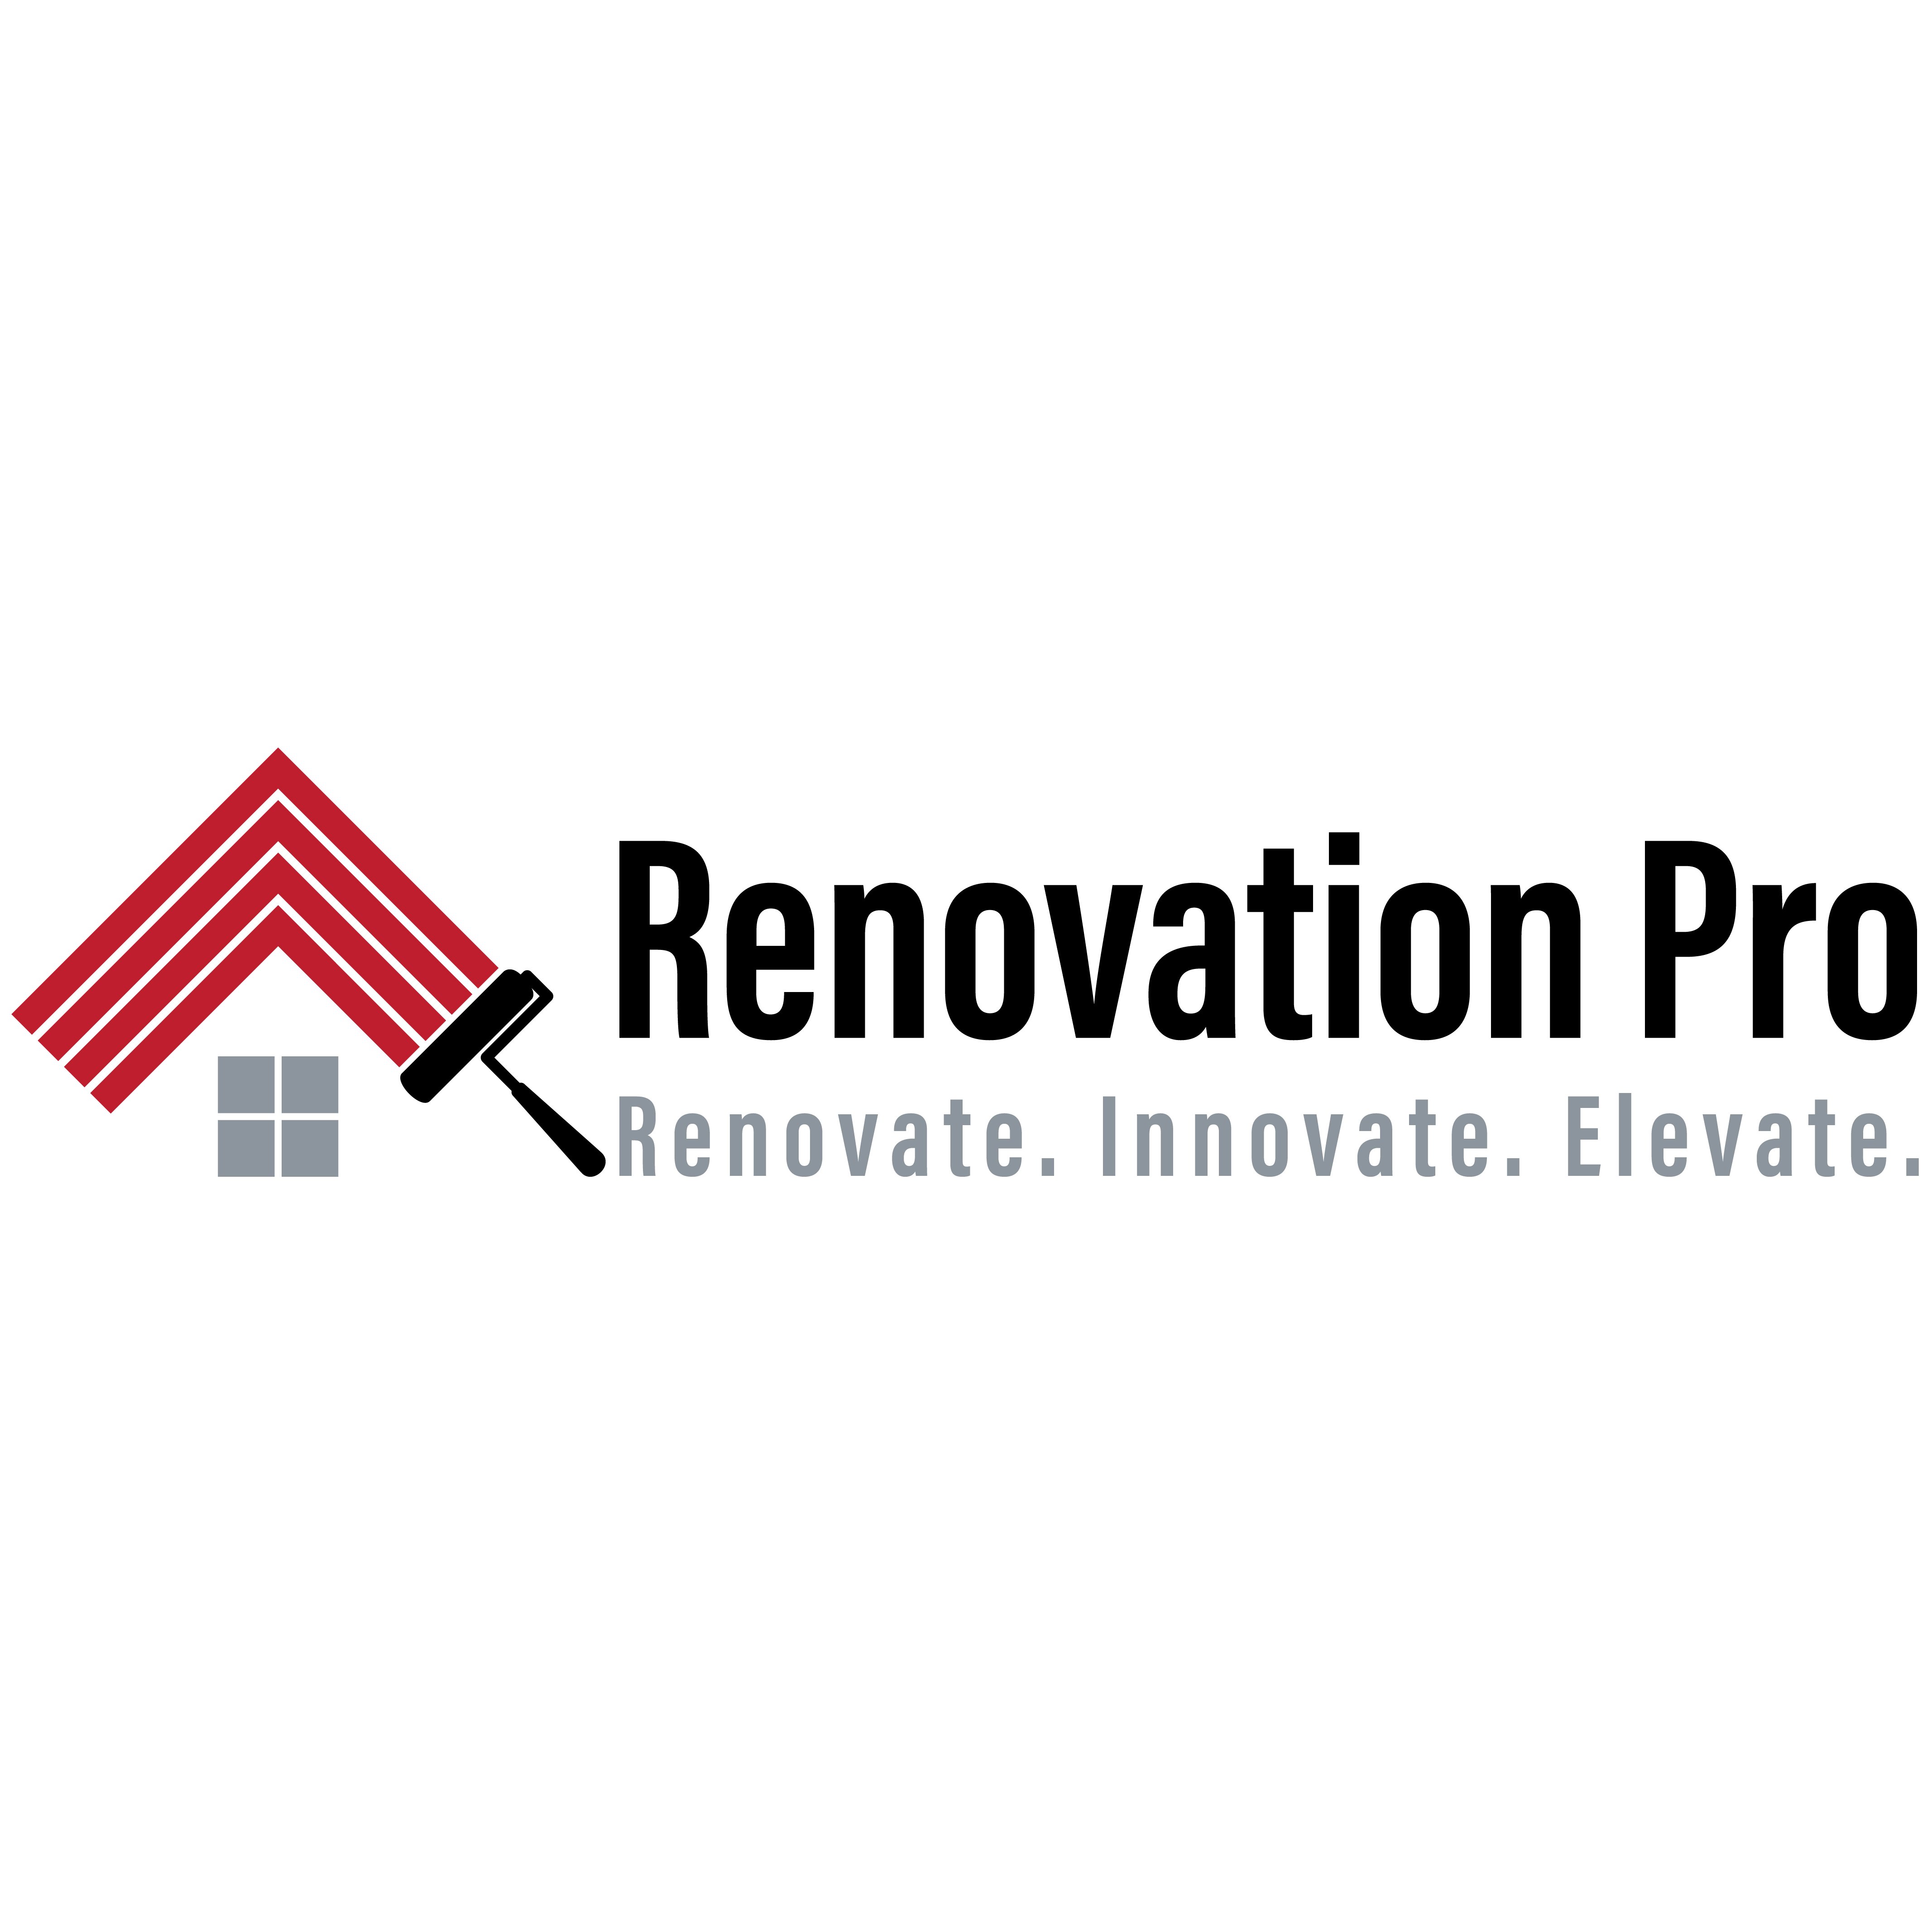 Renovation Pro Logo